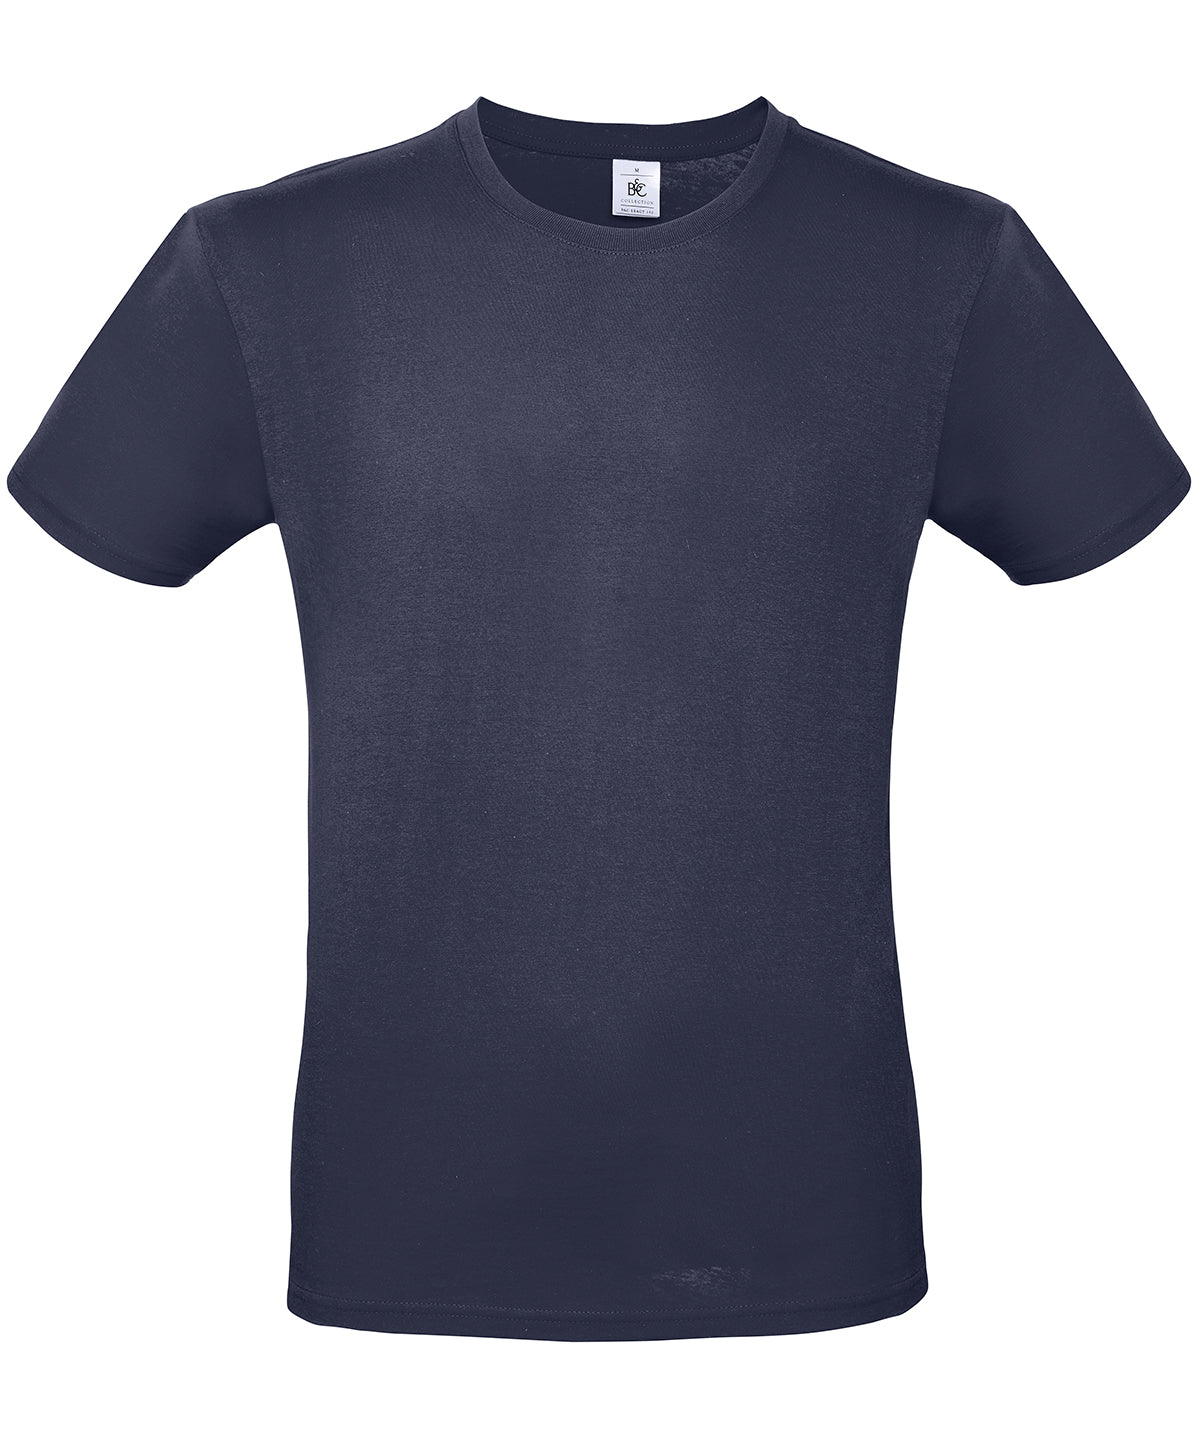 Personalised T-Shirts - Dark Purple B&C Collection B&C #E150